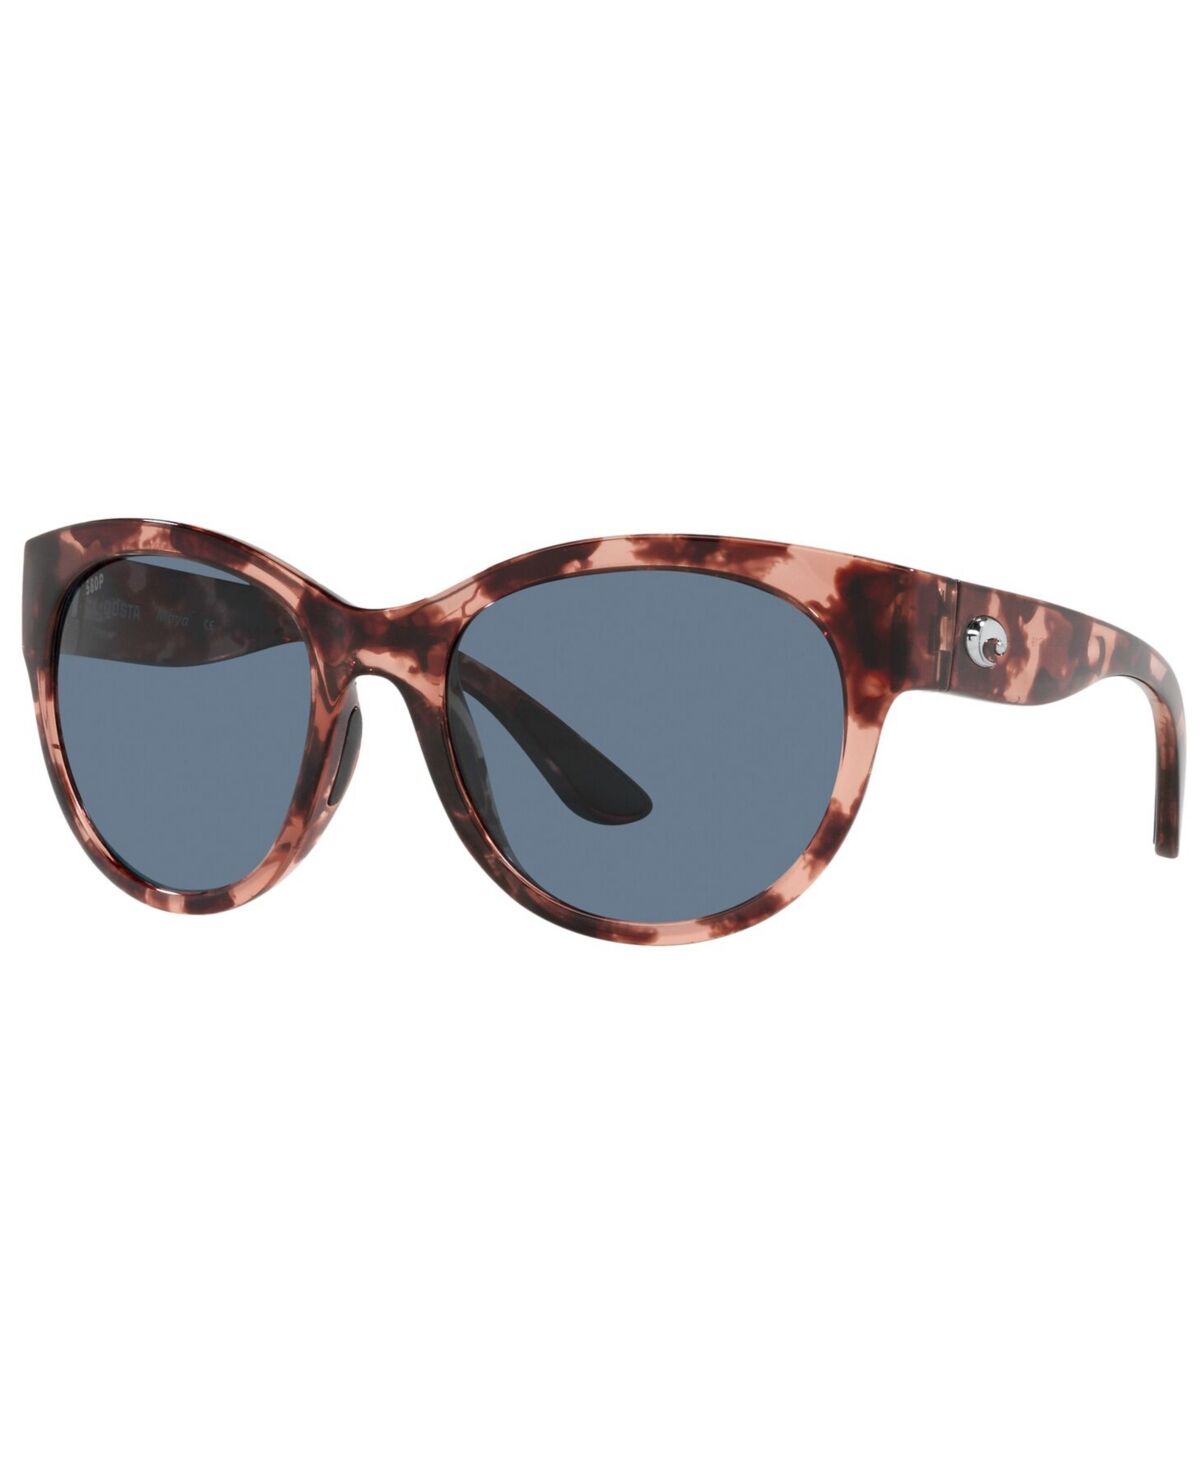 Costa Del Mar Maya Polarized Sunglasses, 6S9011 55 - SHINY CORAL TORTOISE/GRAY P